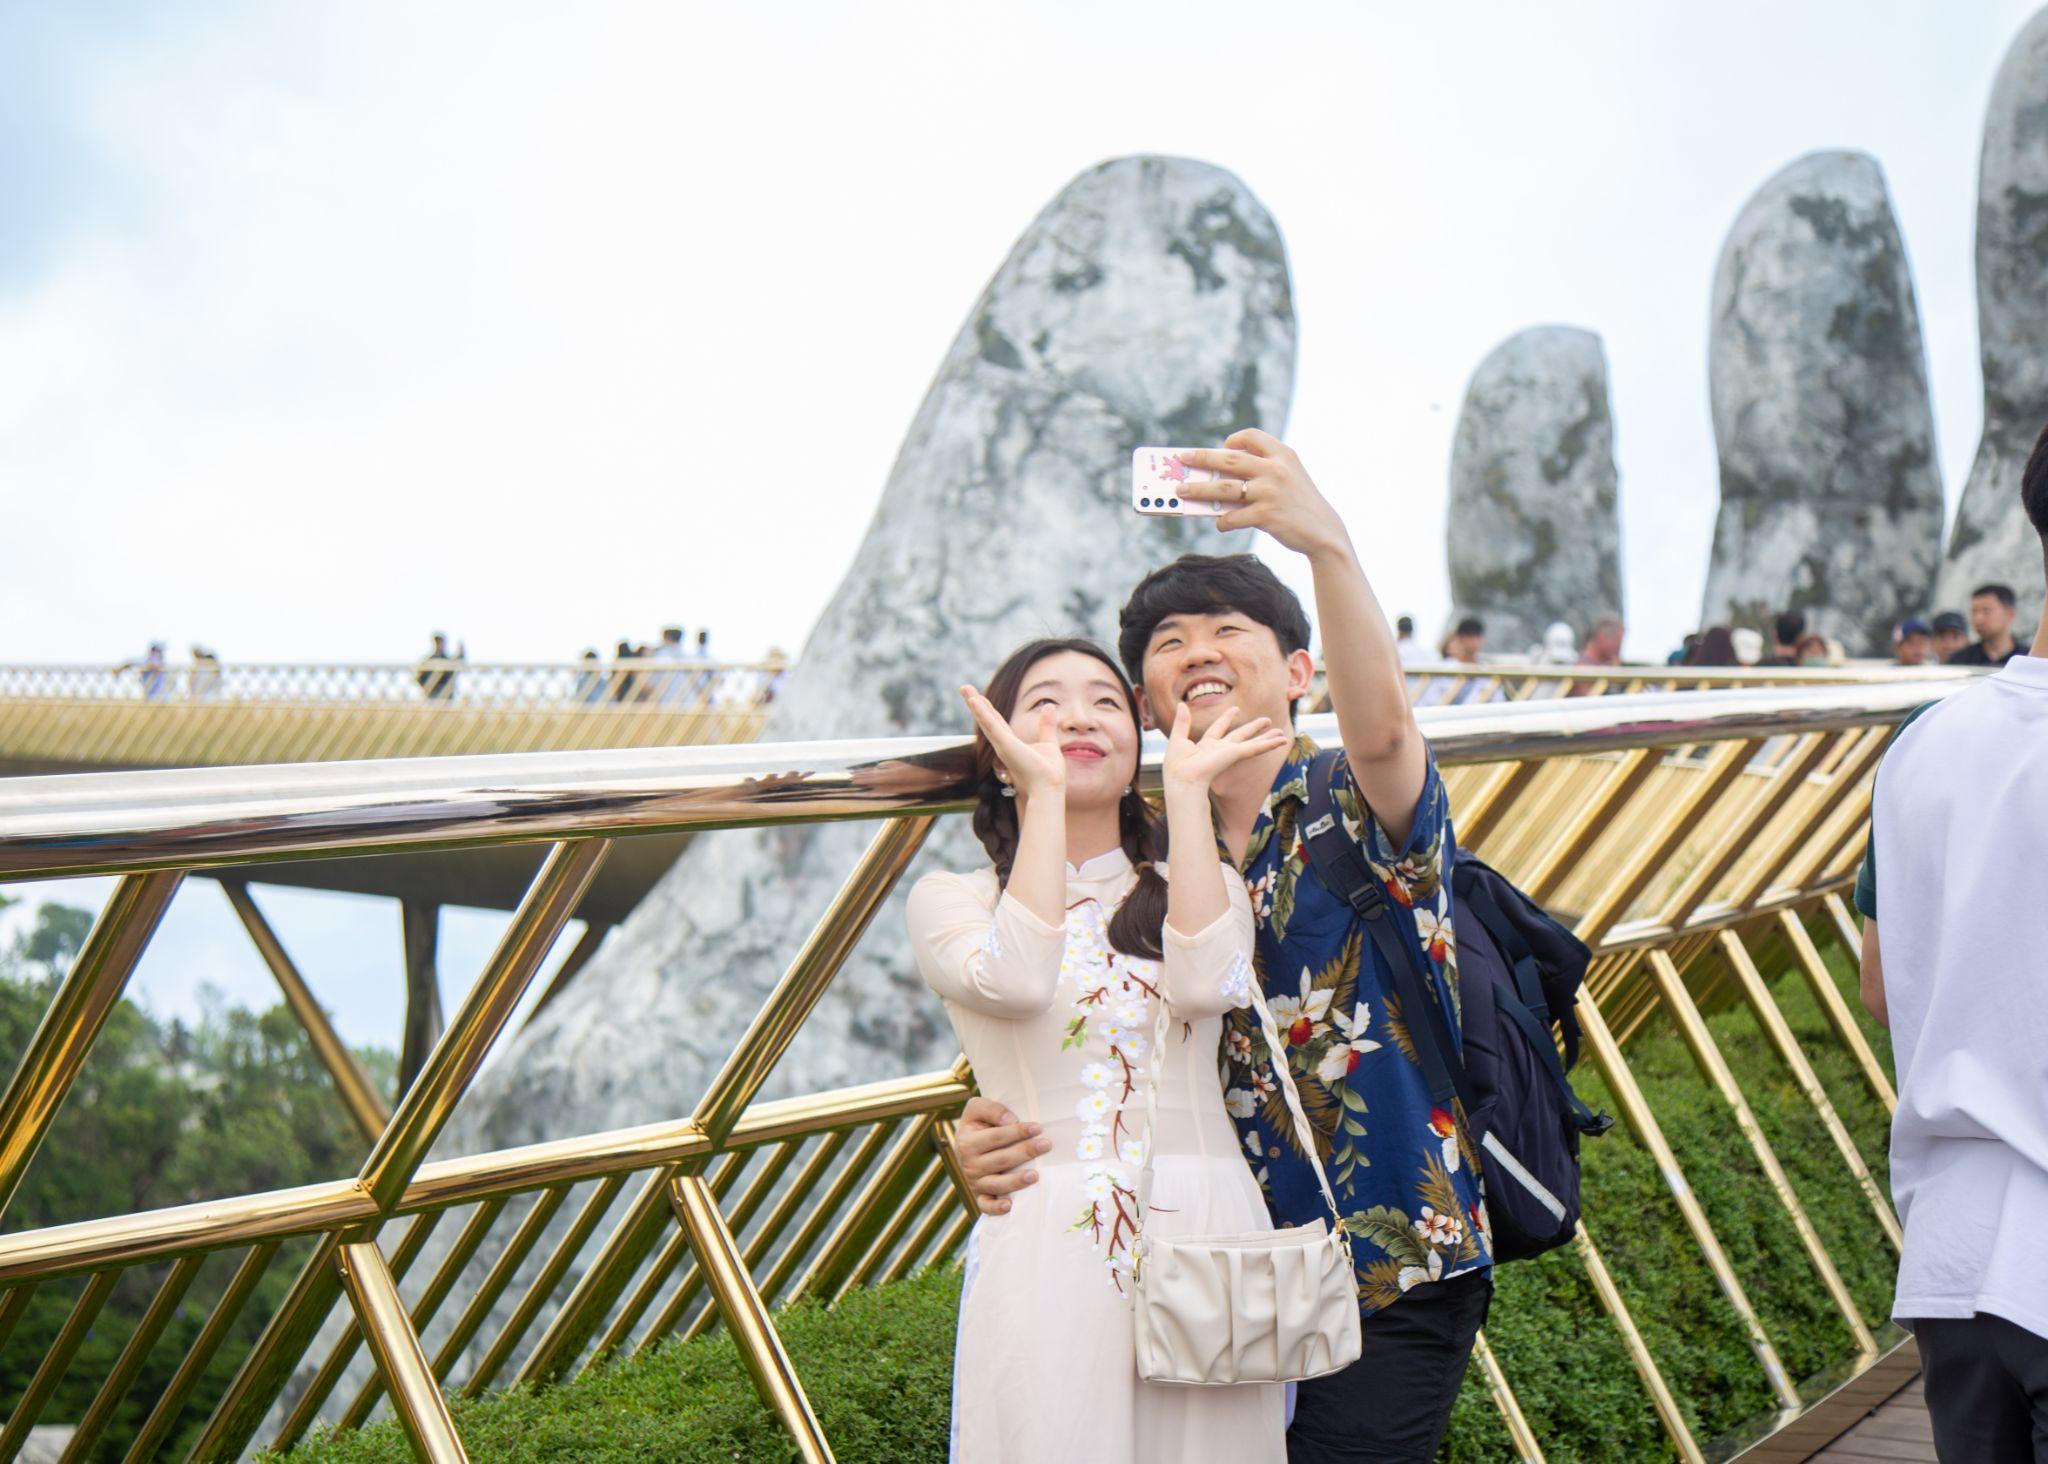 Vietnam's appeal proves strong for Korean visitors | Travel | Vietnam+  (VietnamPlus)